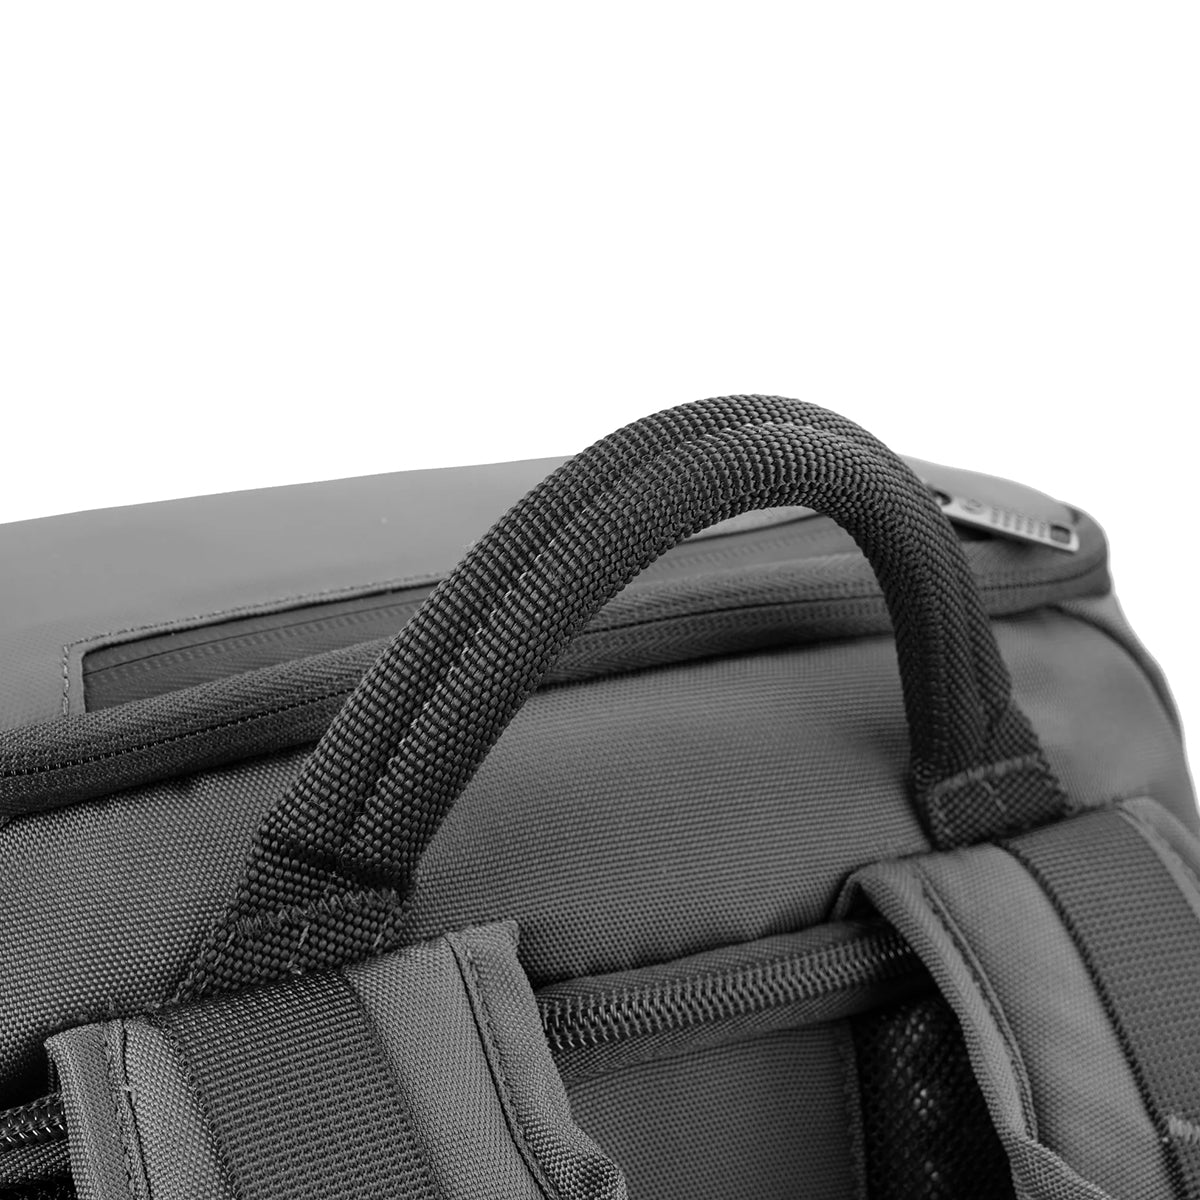 Vanguard Mochila VEO Adaptor S46 Black Modern Camera Backpack w/ USB Port